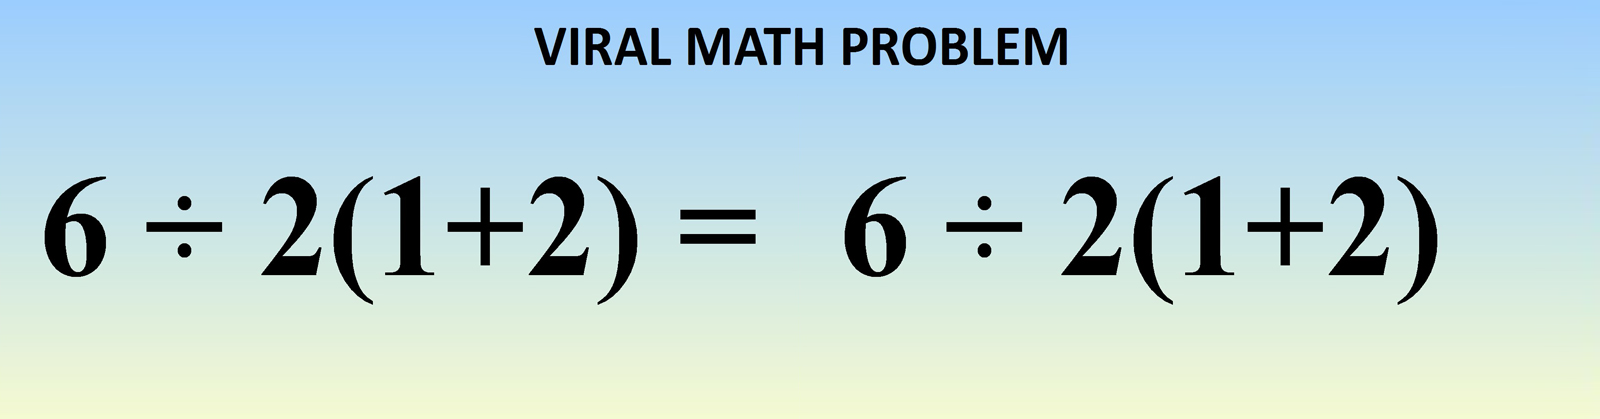 math-problem-FI04.png